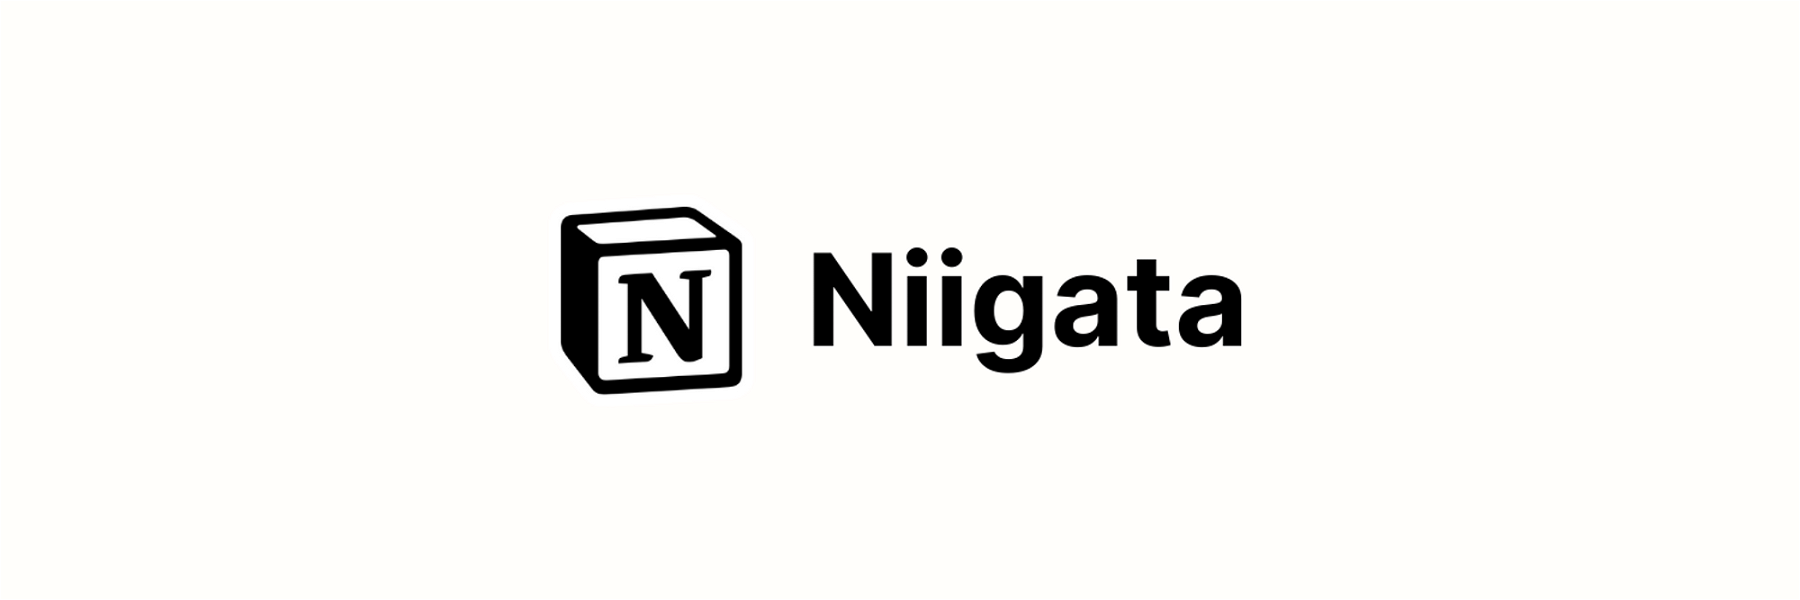 Notion Niigata